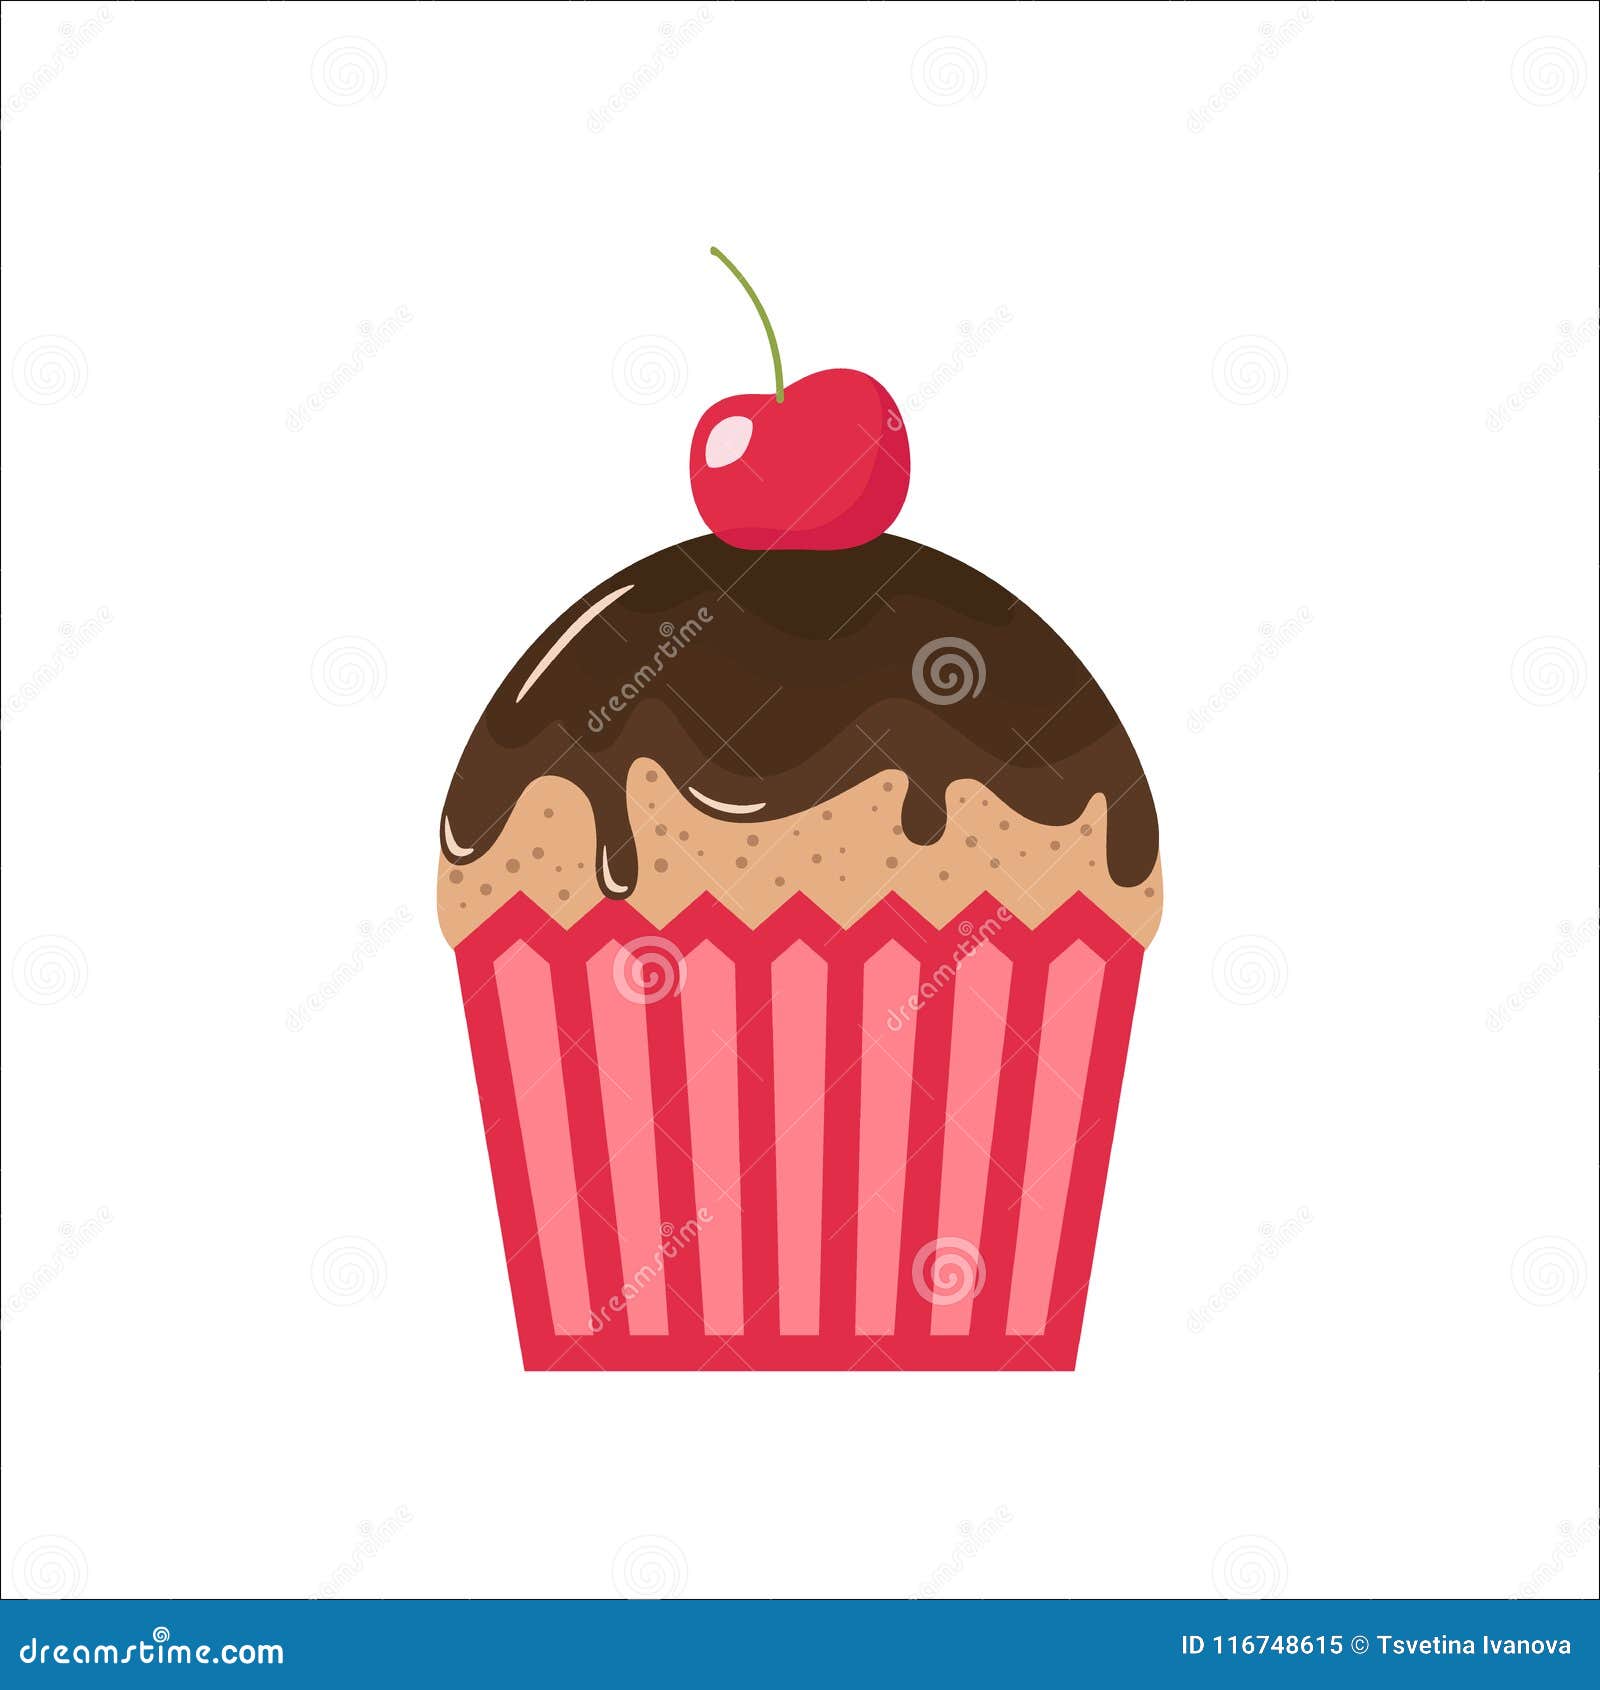 Cartoon Chocolate Cupcake With Cherry On Top. Clipart Cupcake Cartoon ...